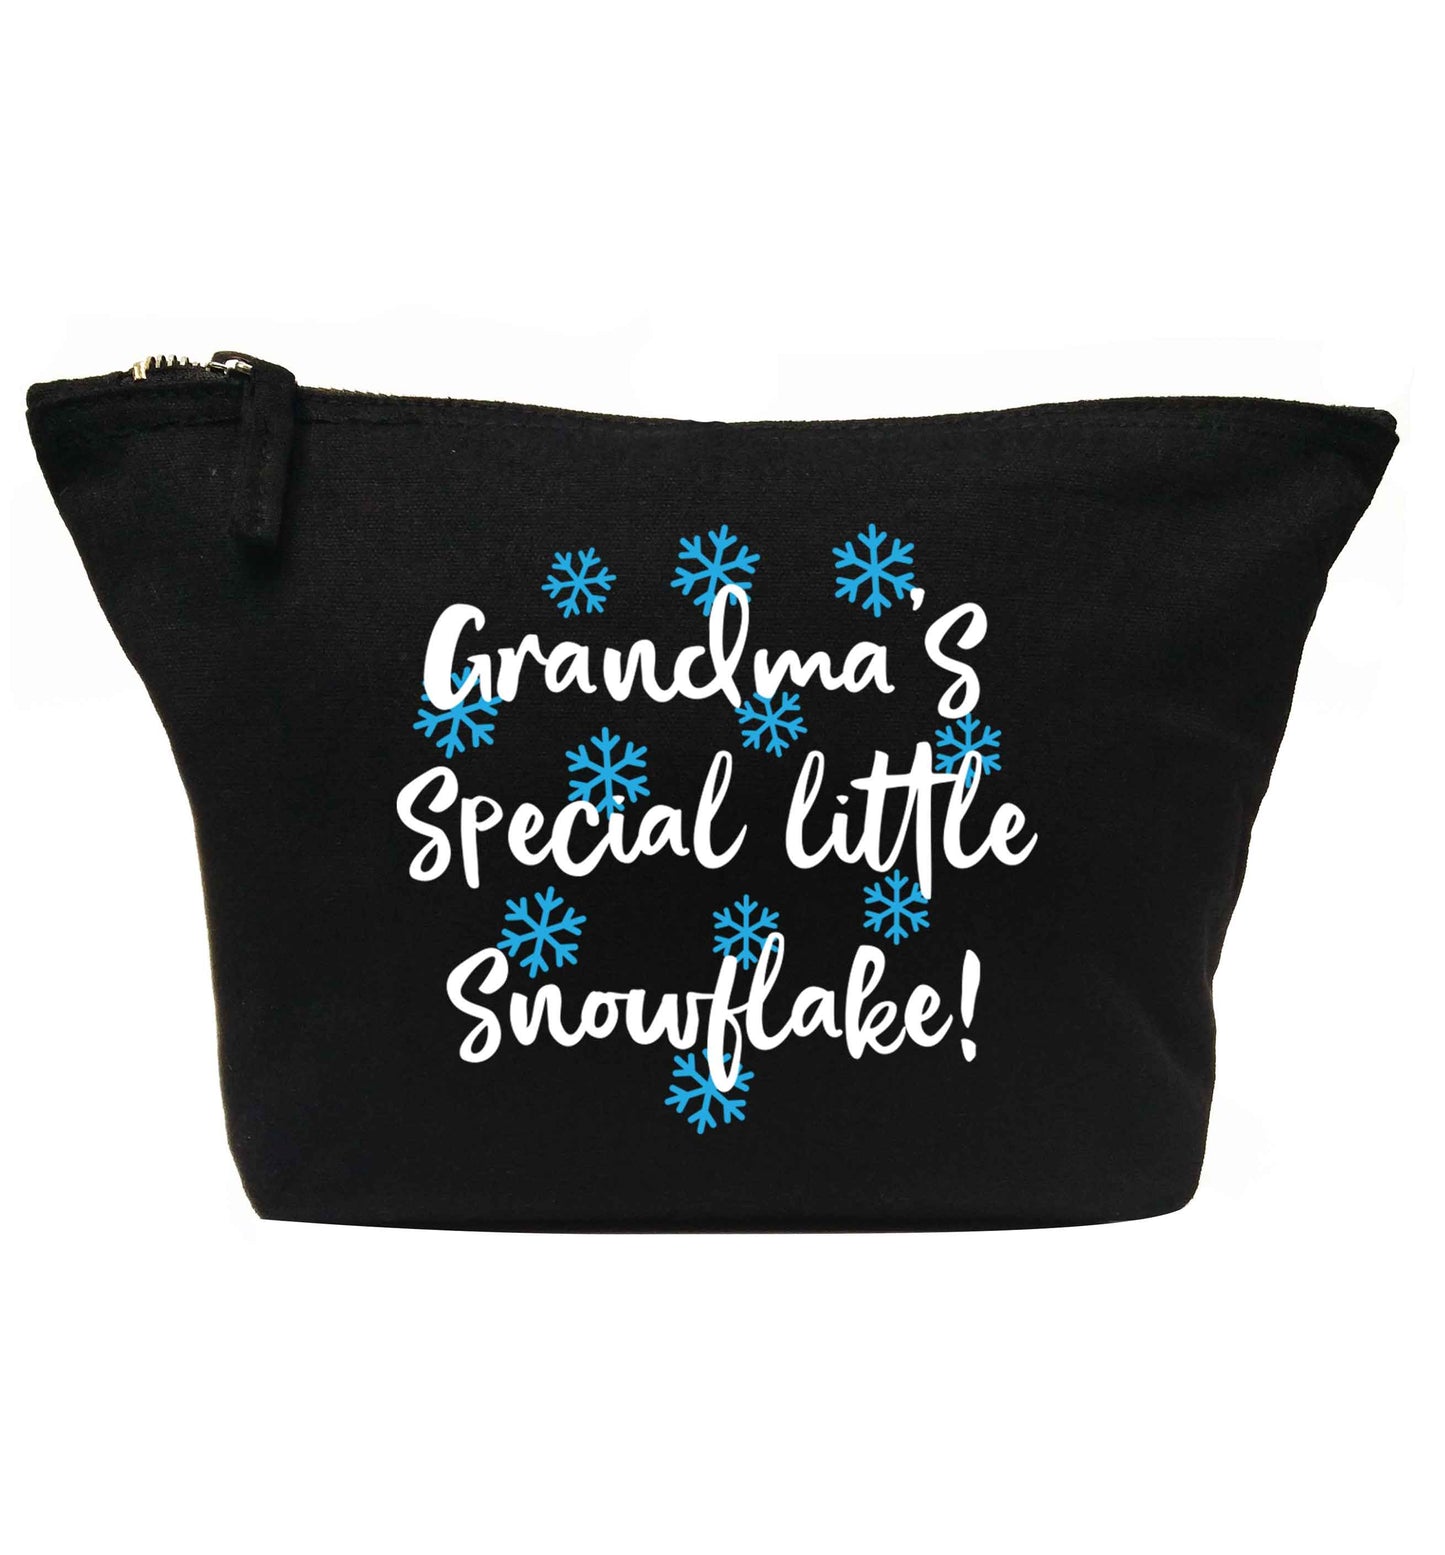 Grandma's special little snowflake | makeup / wash bag